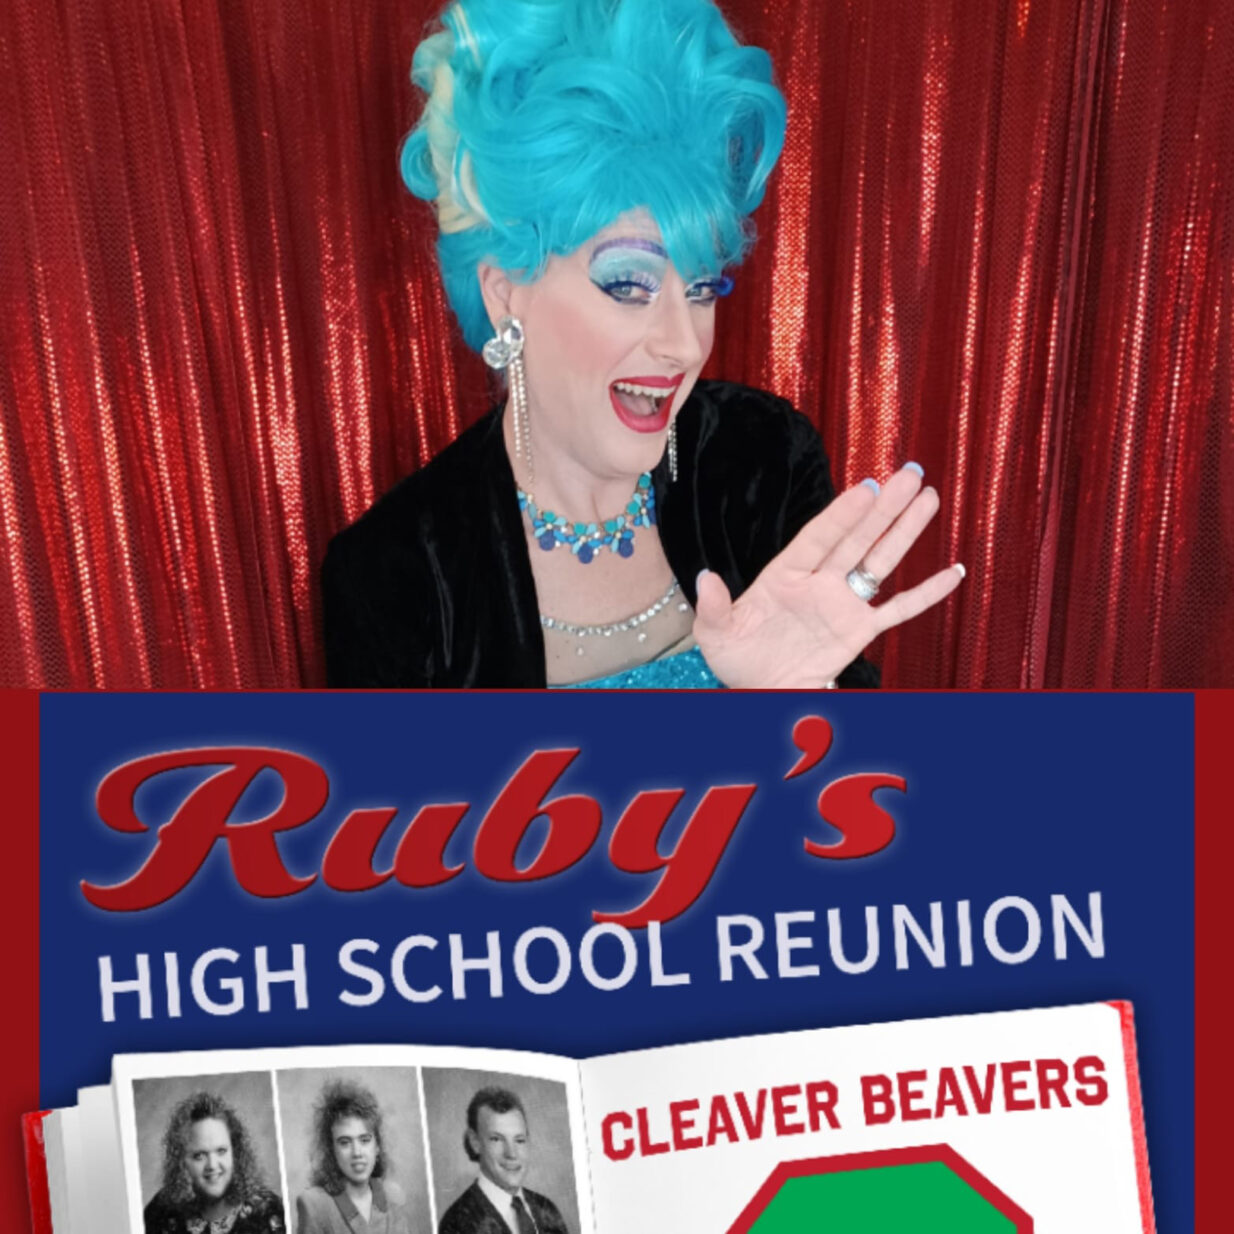 Ruby's High School Reunion